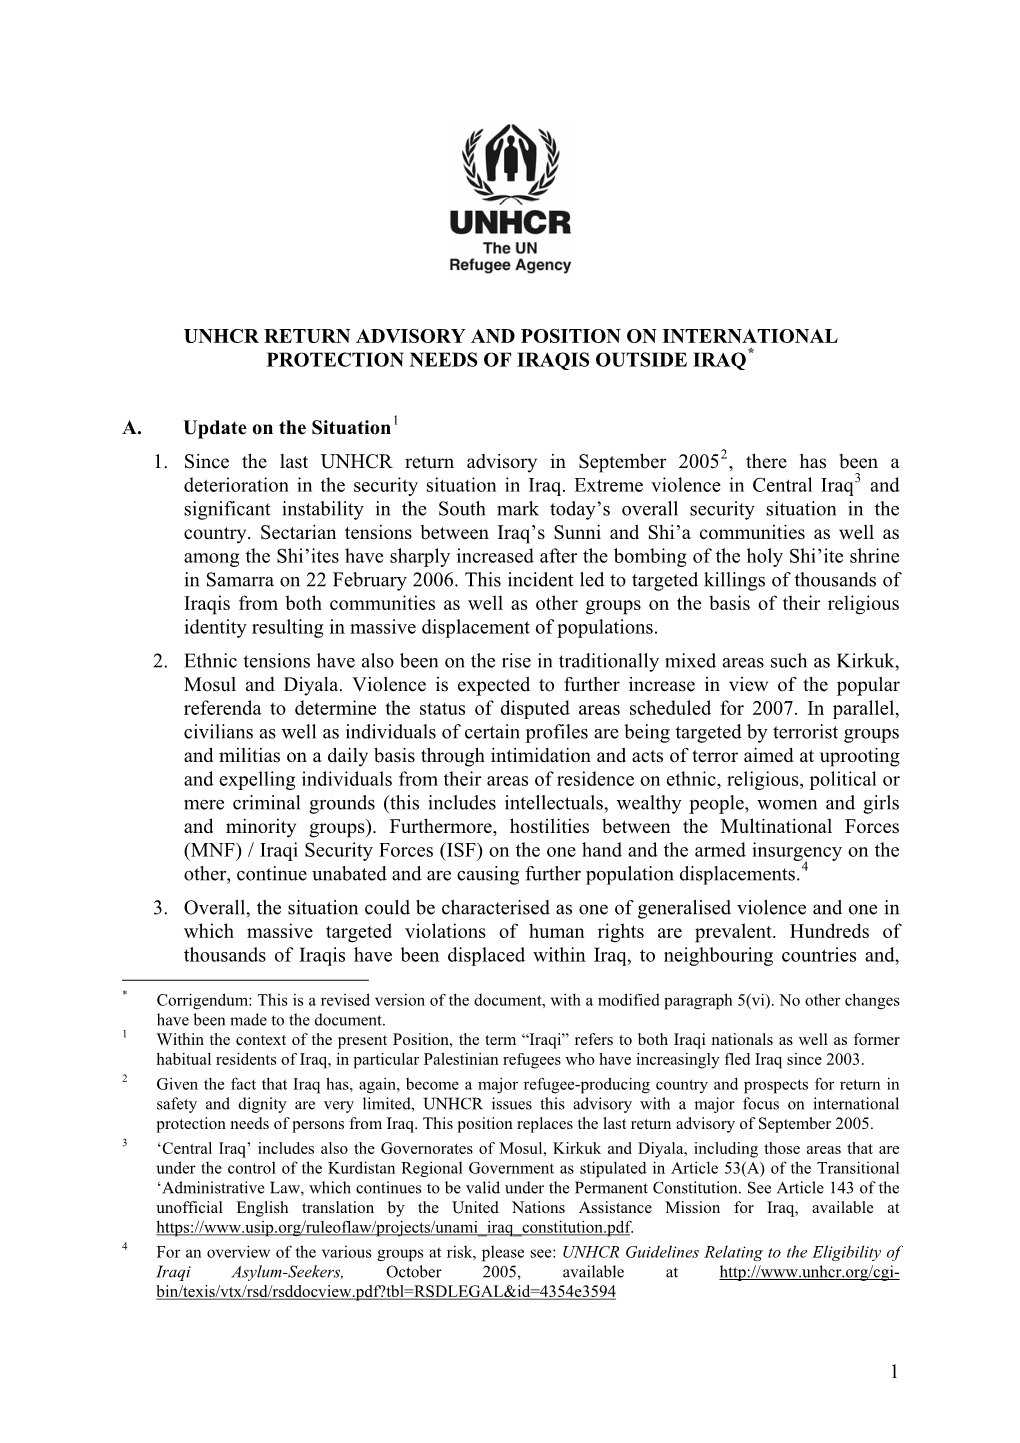 UNHCR Advisory Regarding